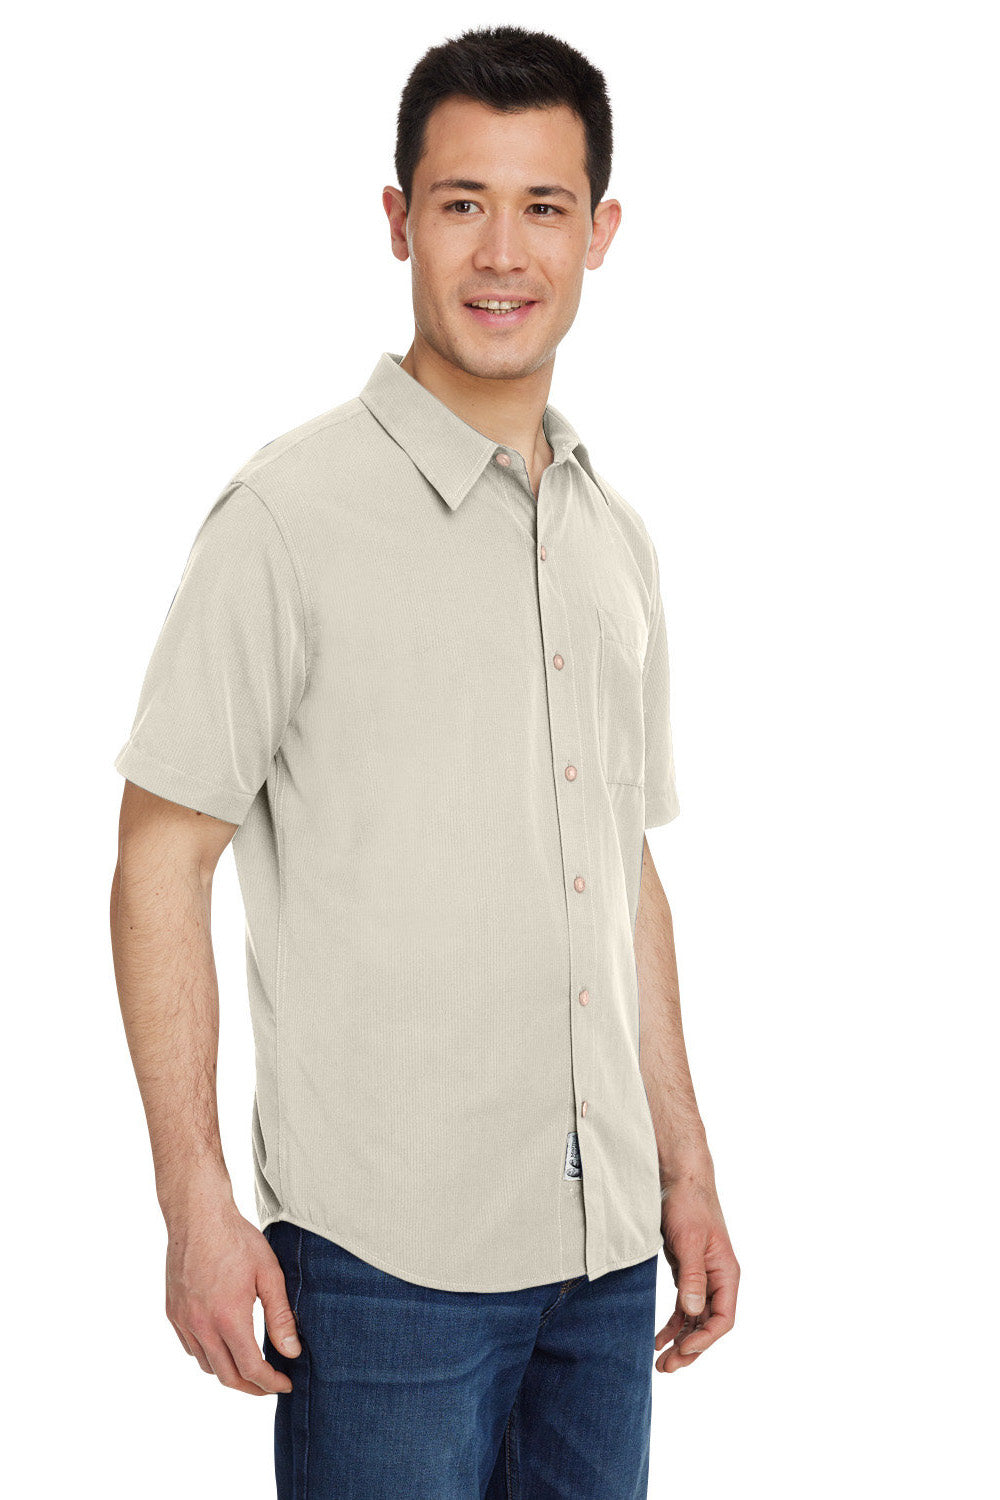 Marmot M14116 Mens Aerobora Short Sleeve Button Down Shirt w/ Pocket Sandbar 3Q